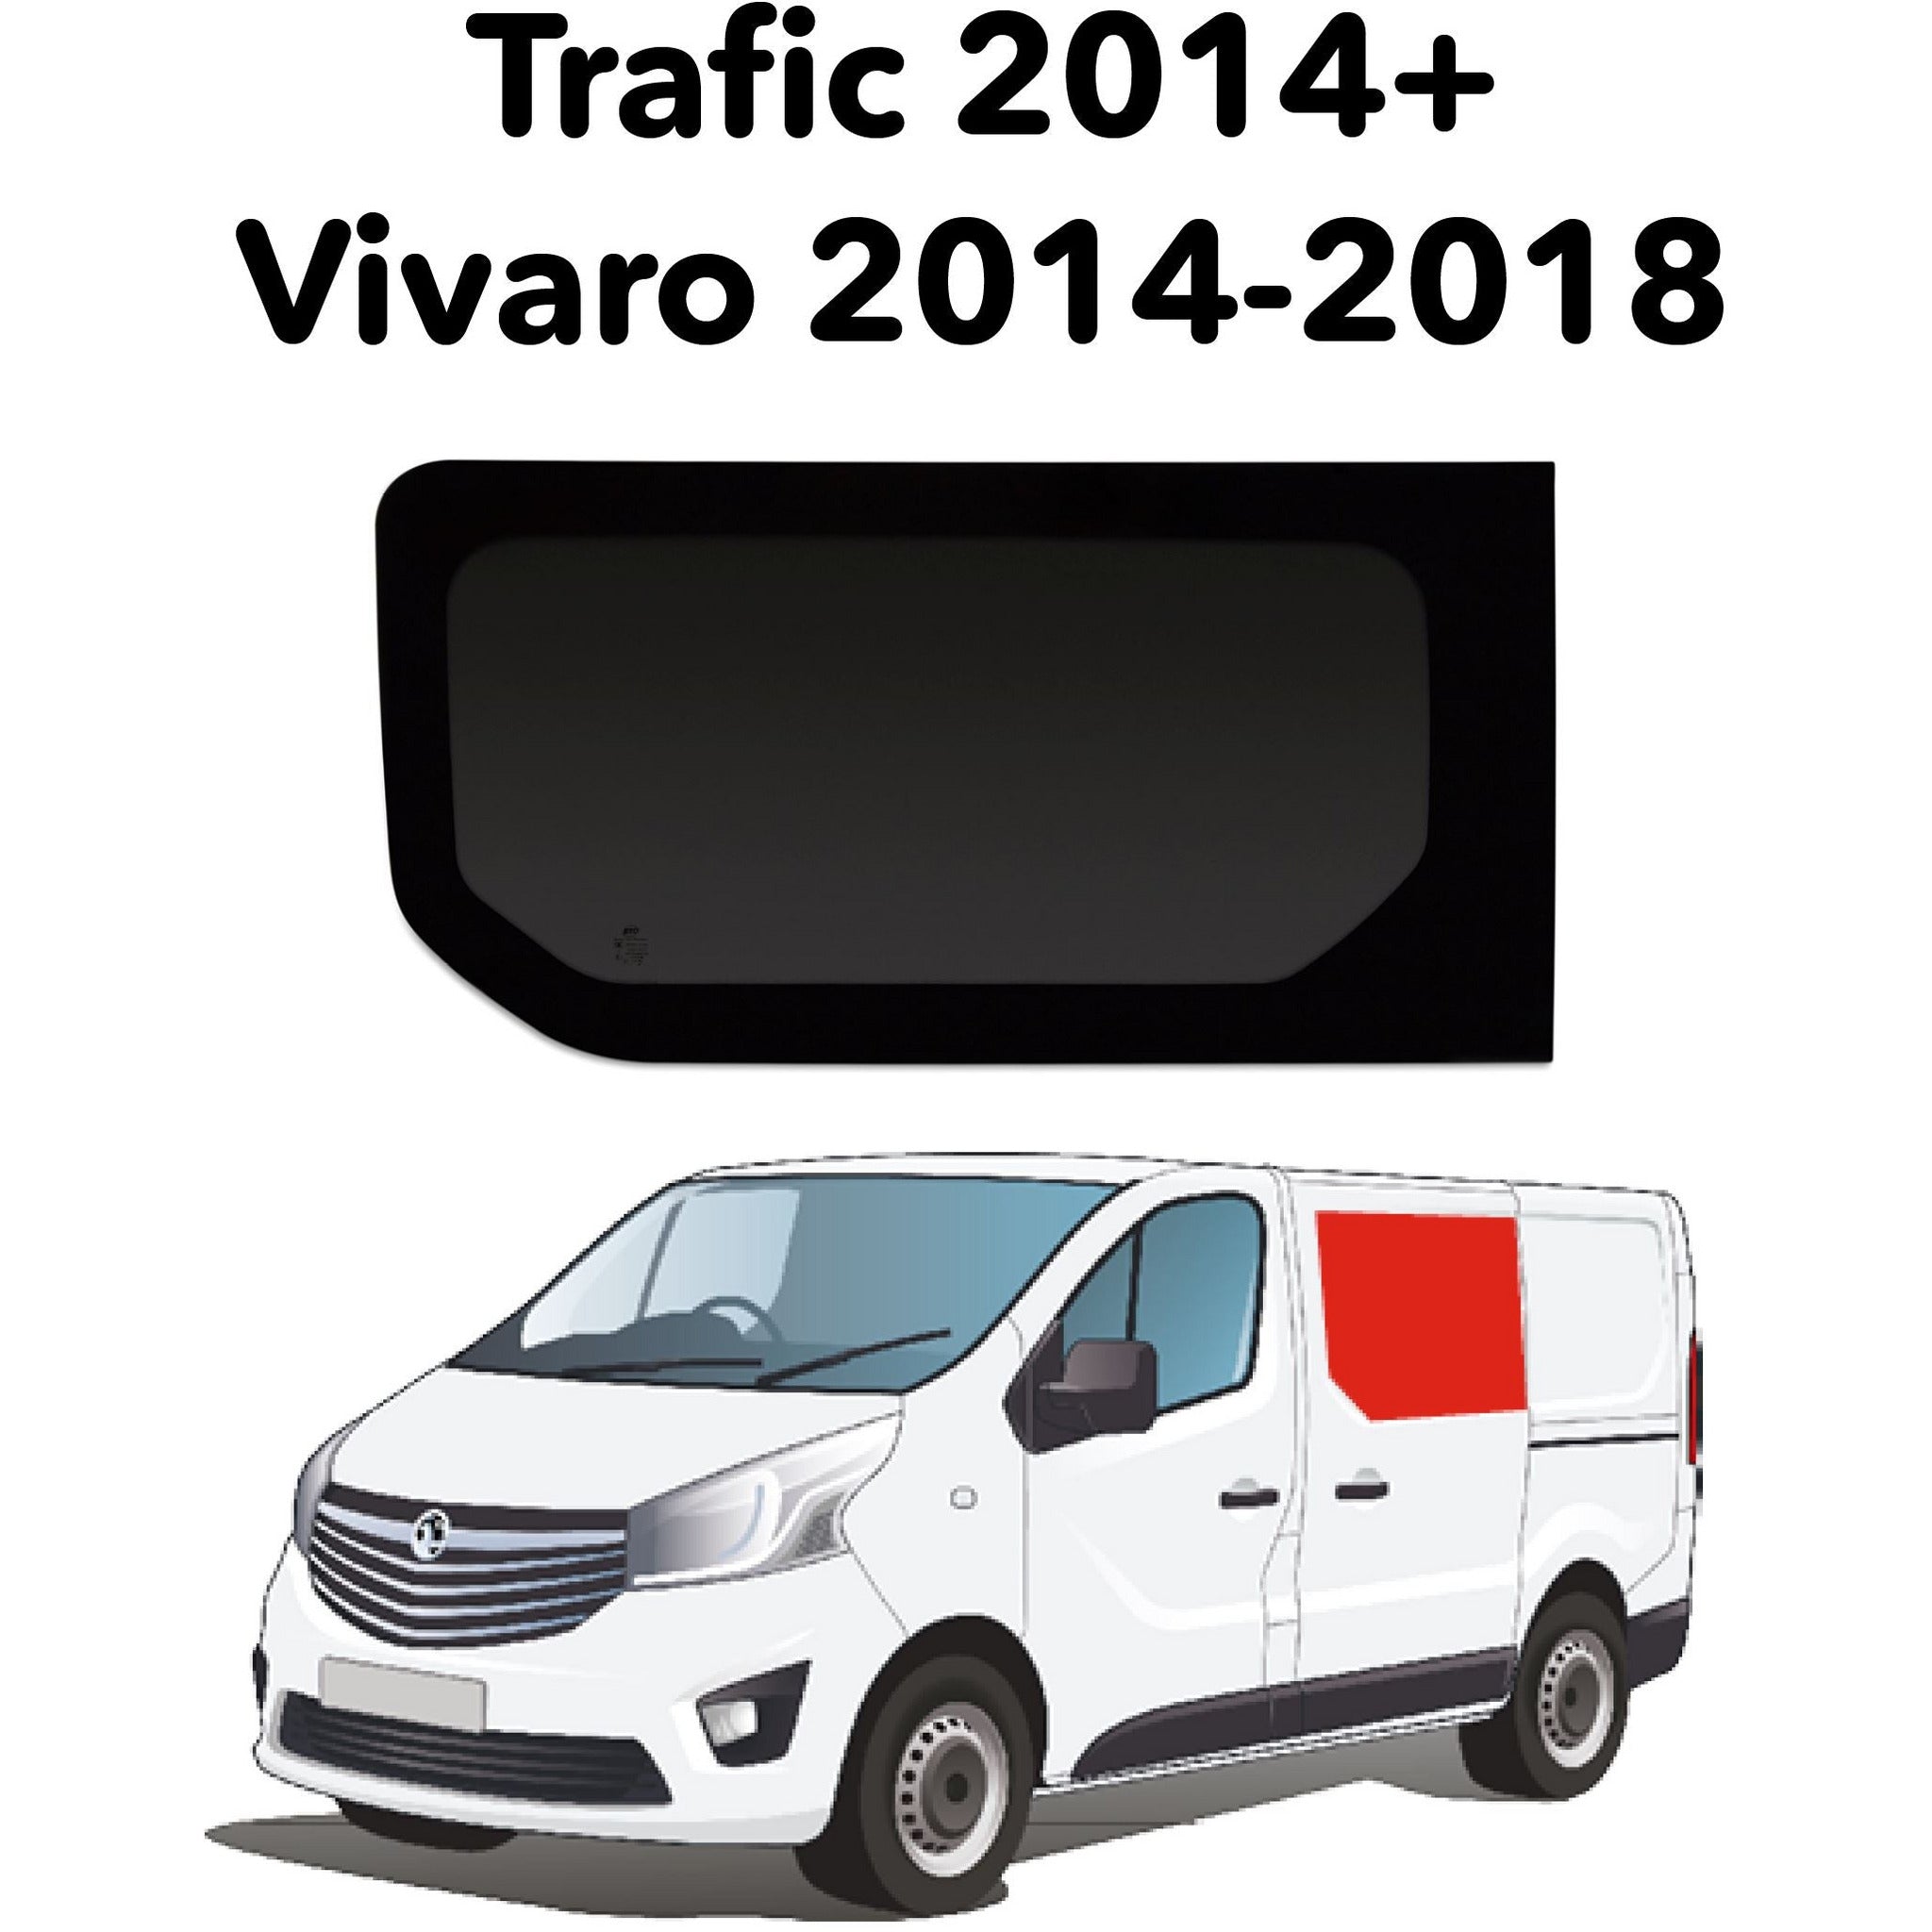 Left Fixed Window Trafic/Vivaro 2014-2018 Camper Glass by Kiravans 